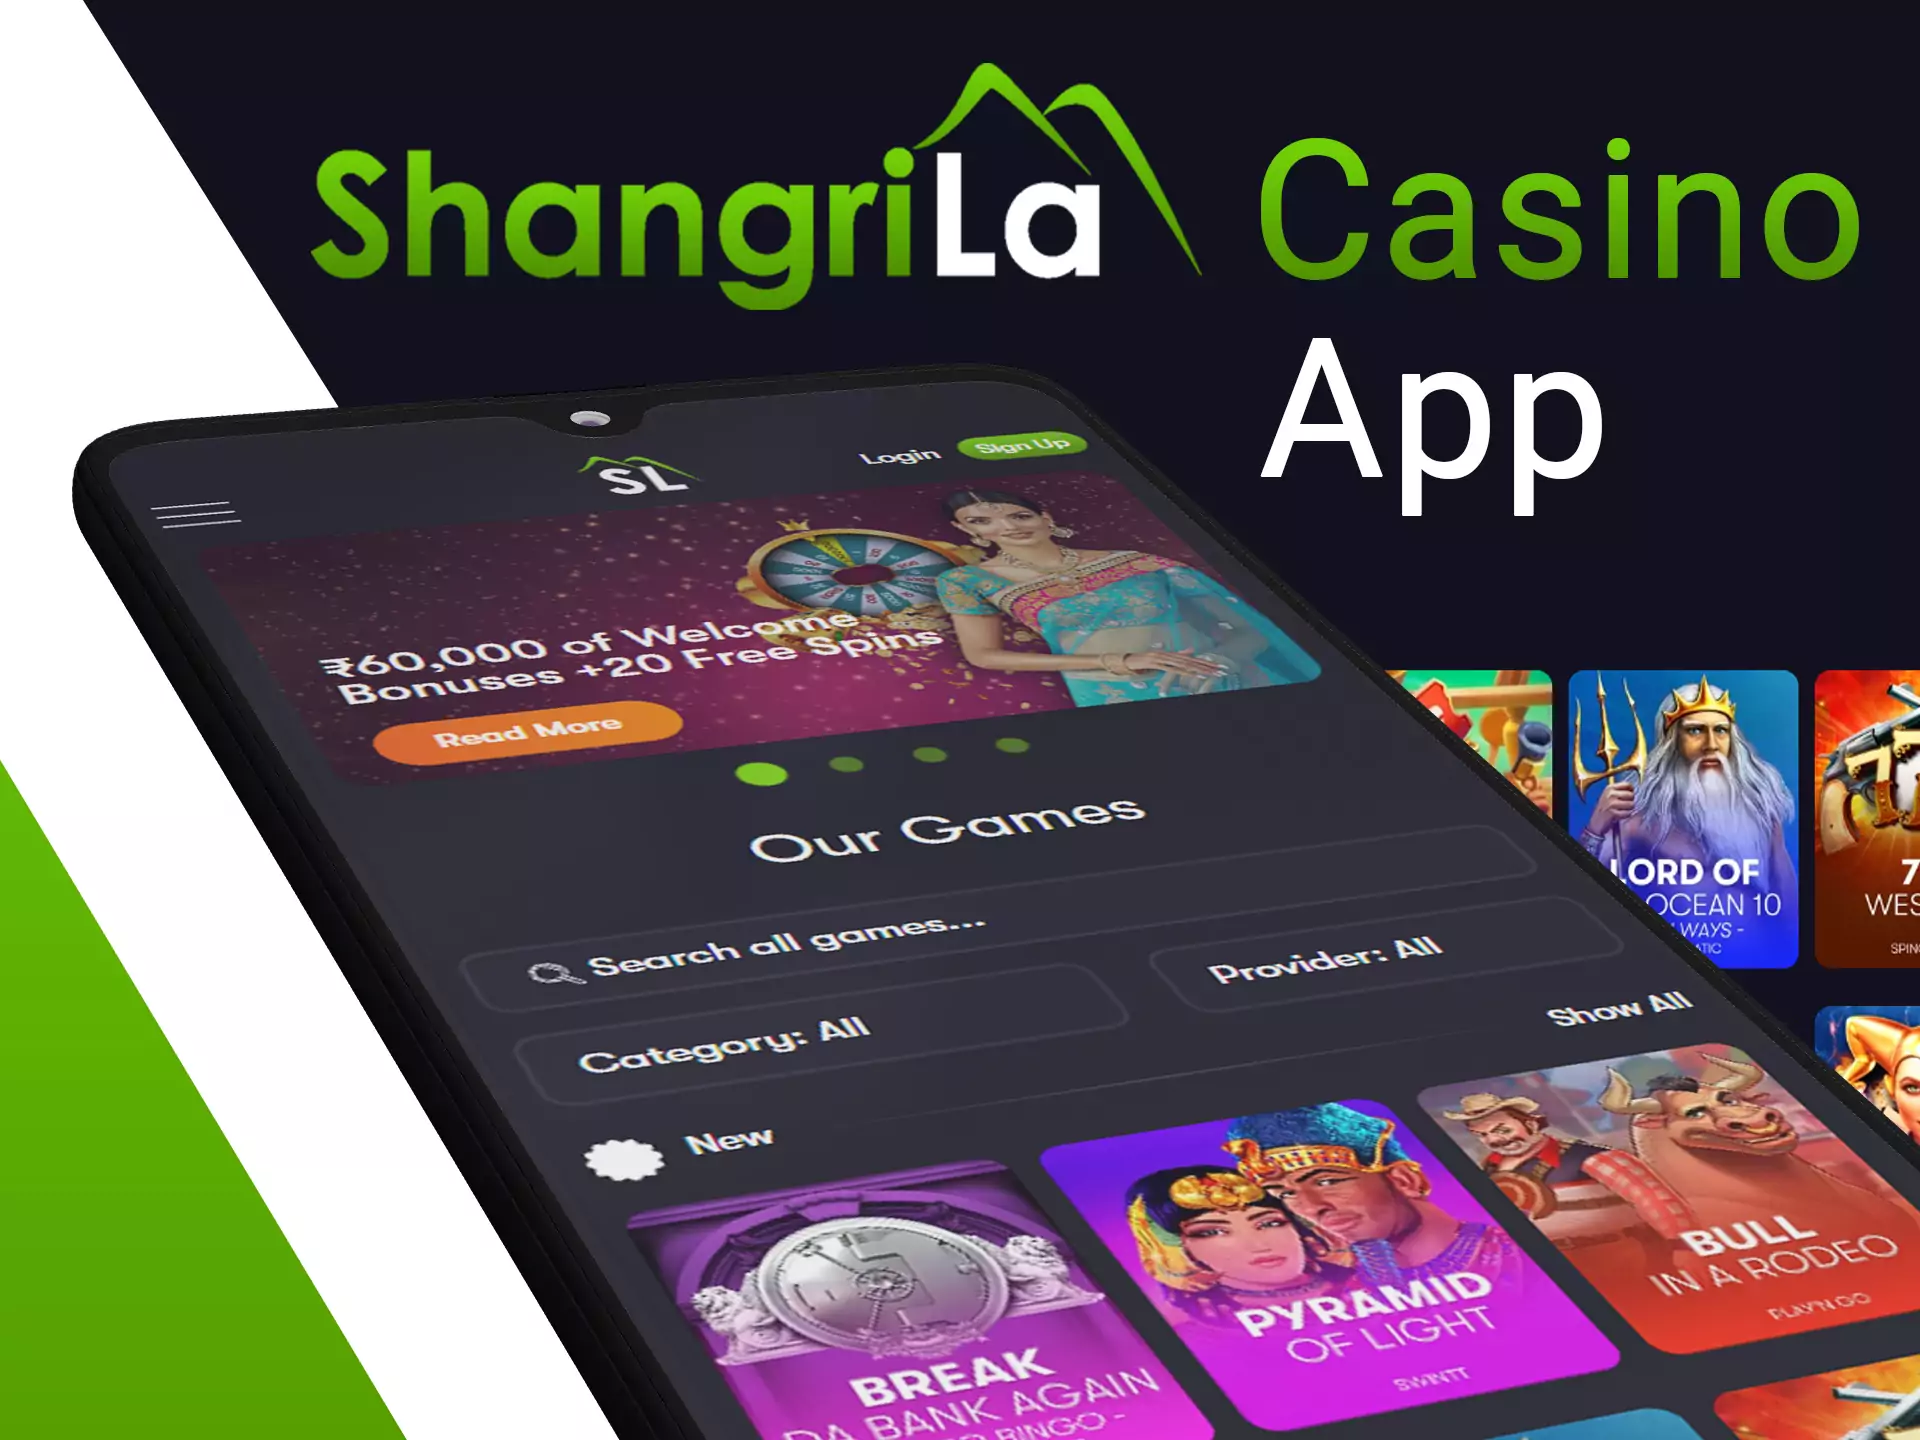 Play Shangri La casino games with comfort using app.